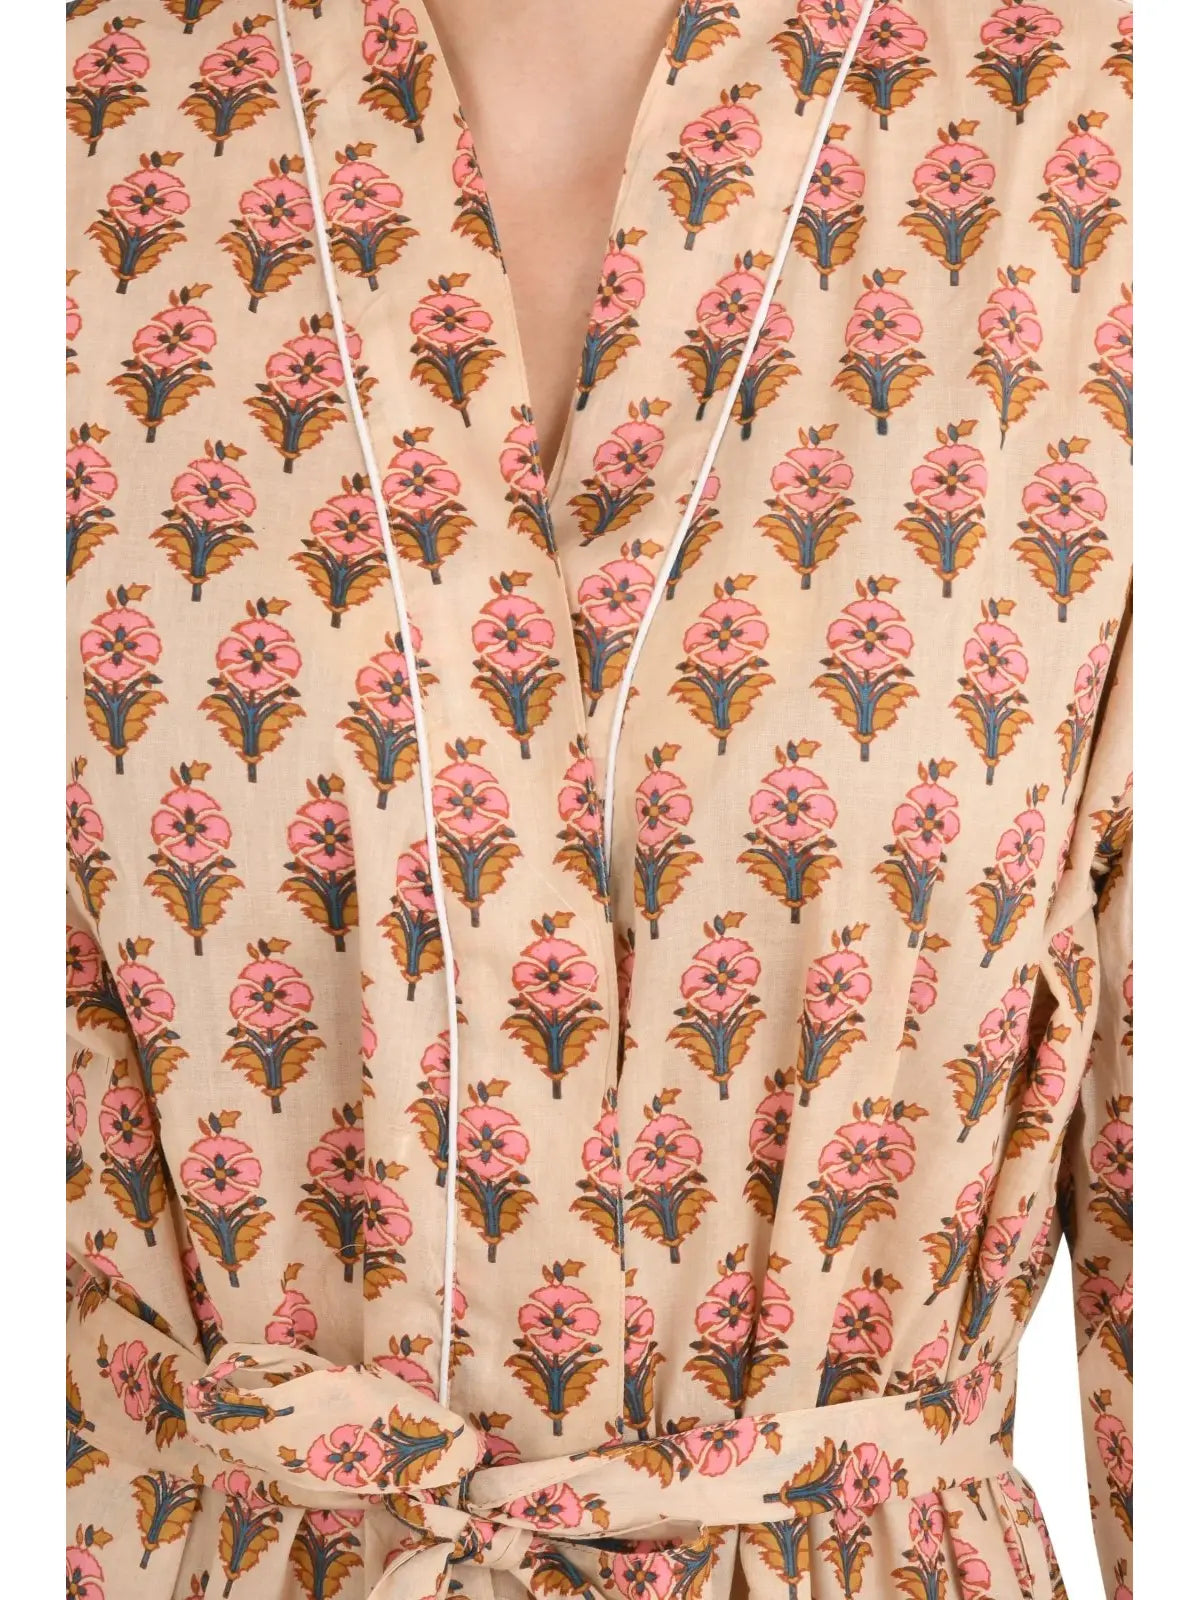 Boho Cotton Kimono House Robe Indian Handprinted Flower Botanical Print Pattern | Lightweight Summer Luxury Beach Holidays Yacht Cover Up Stunning Dress